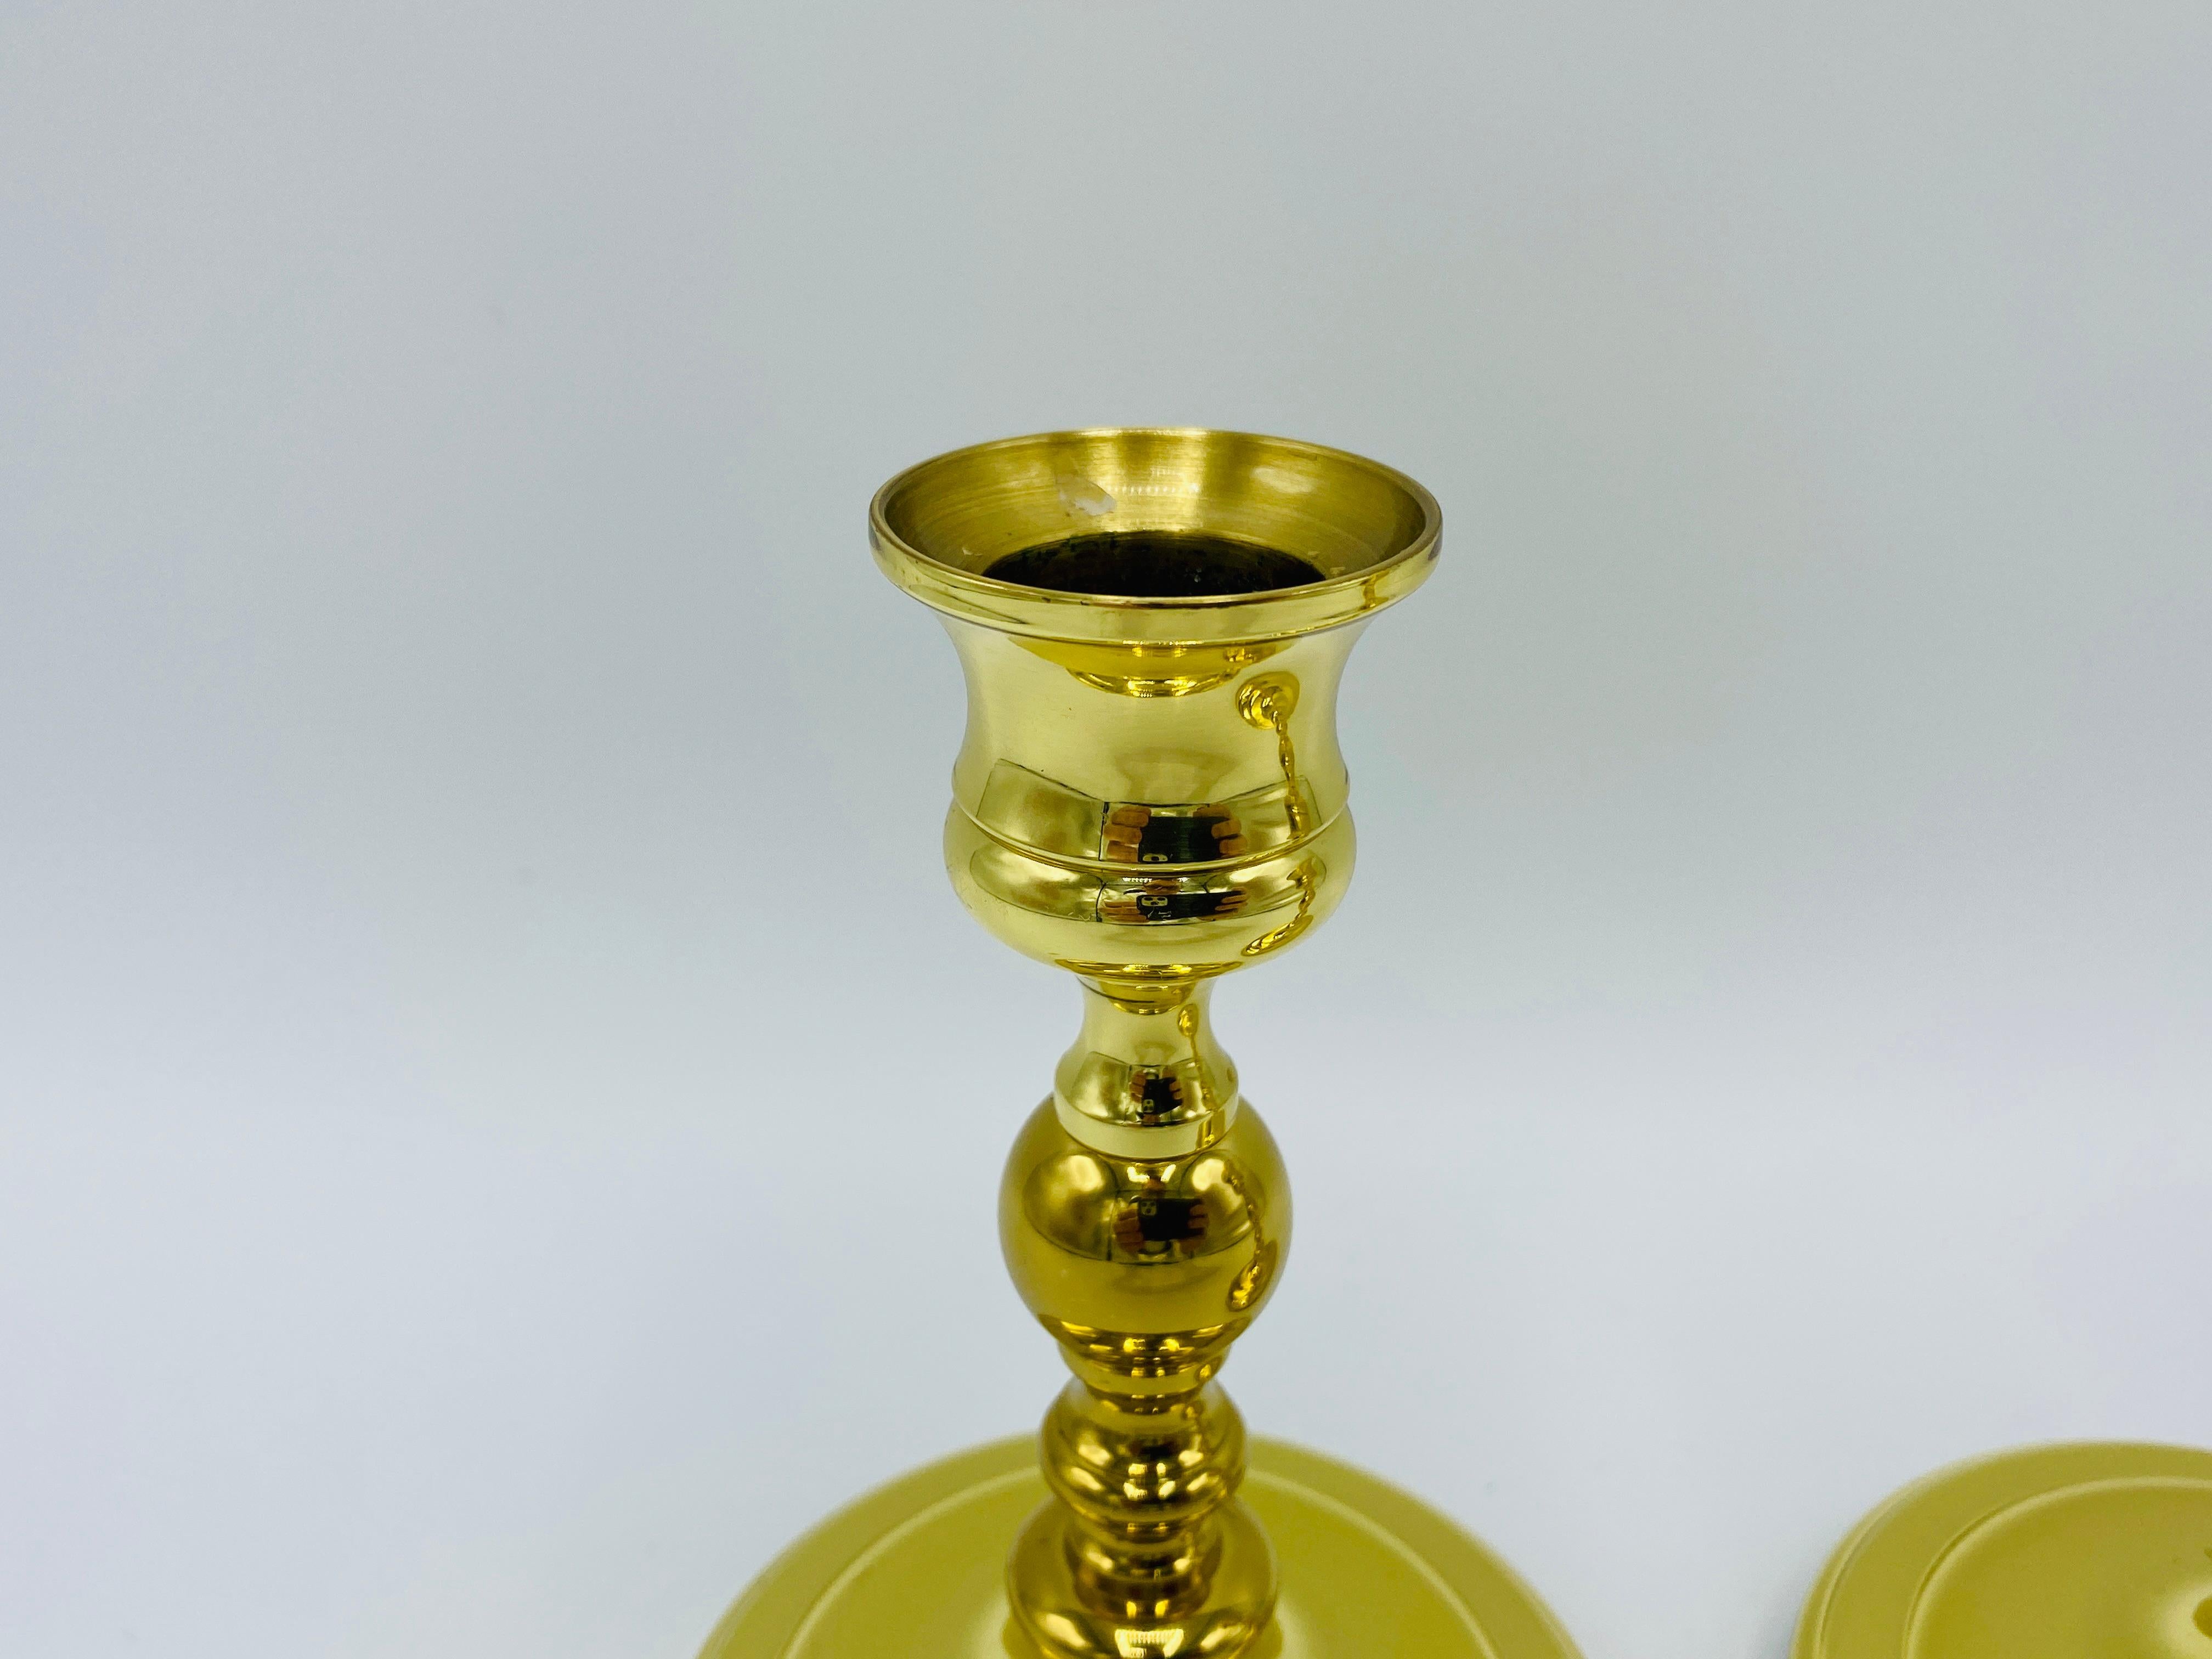 how much are baldwin brass candlesticks worth